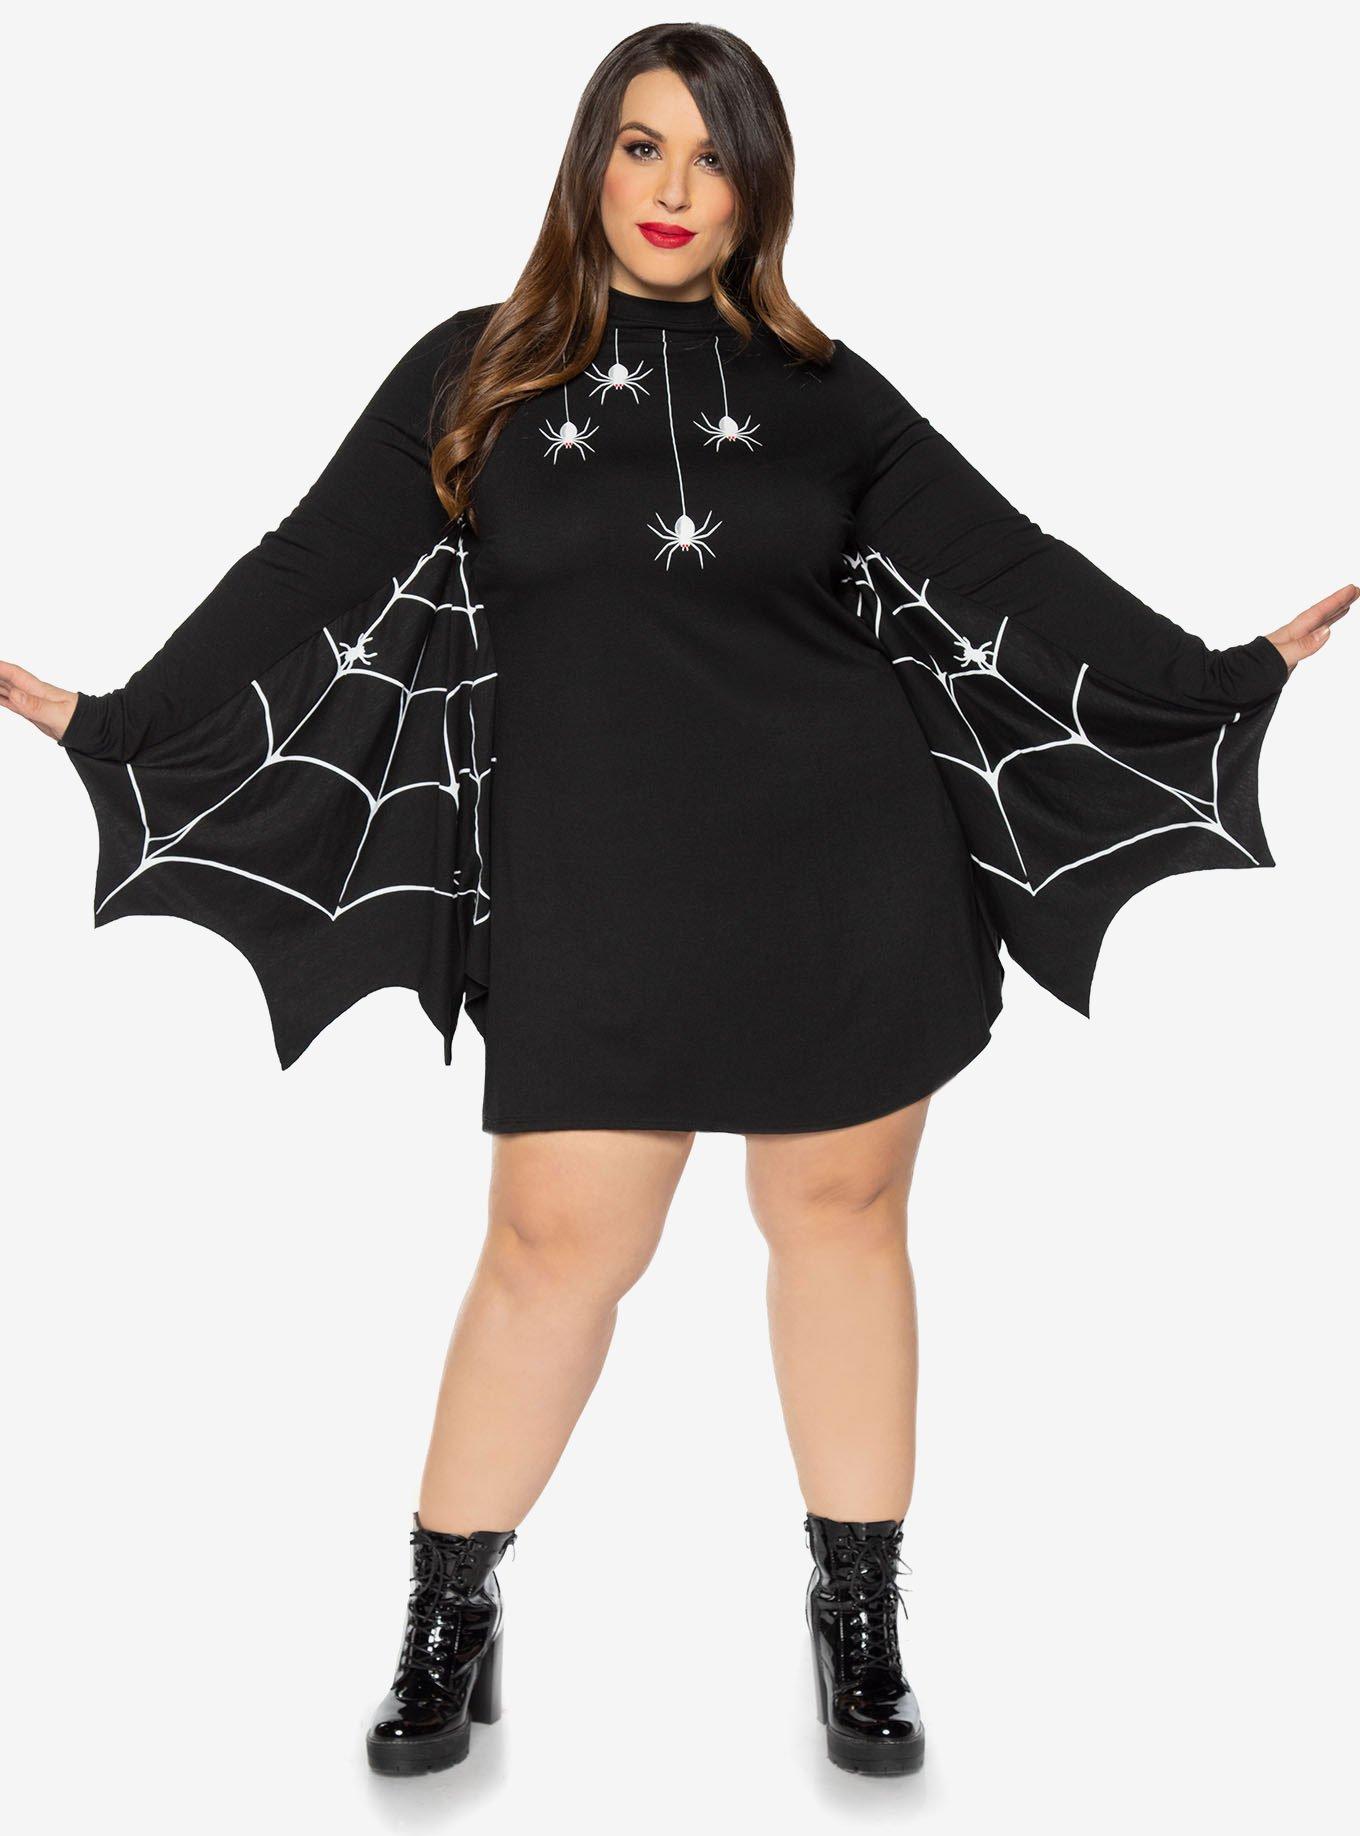 Spiderweb Winged Dress Plus